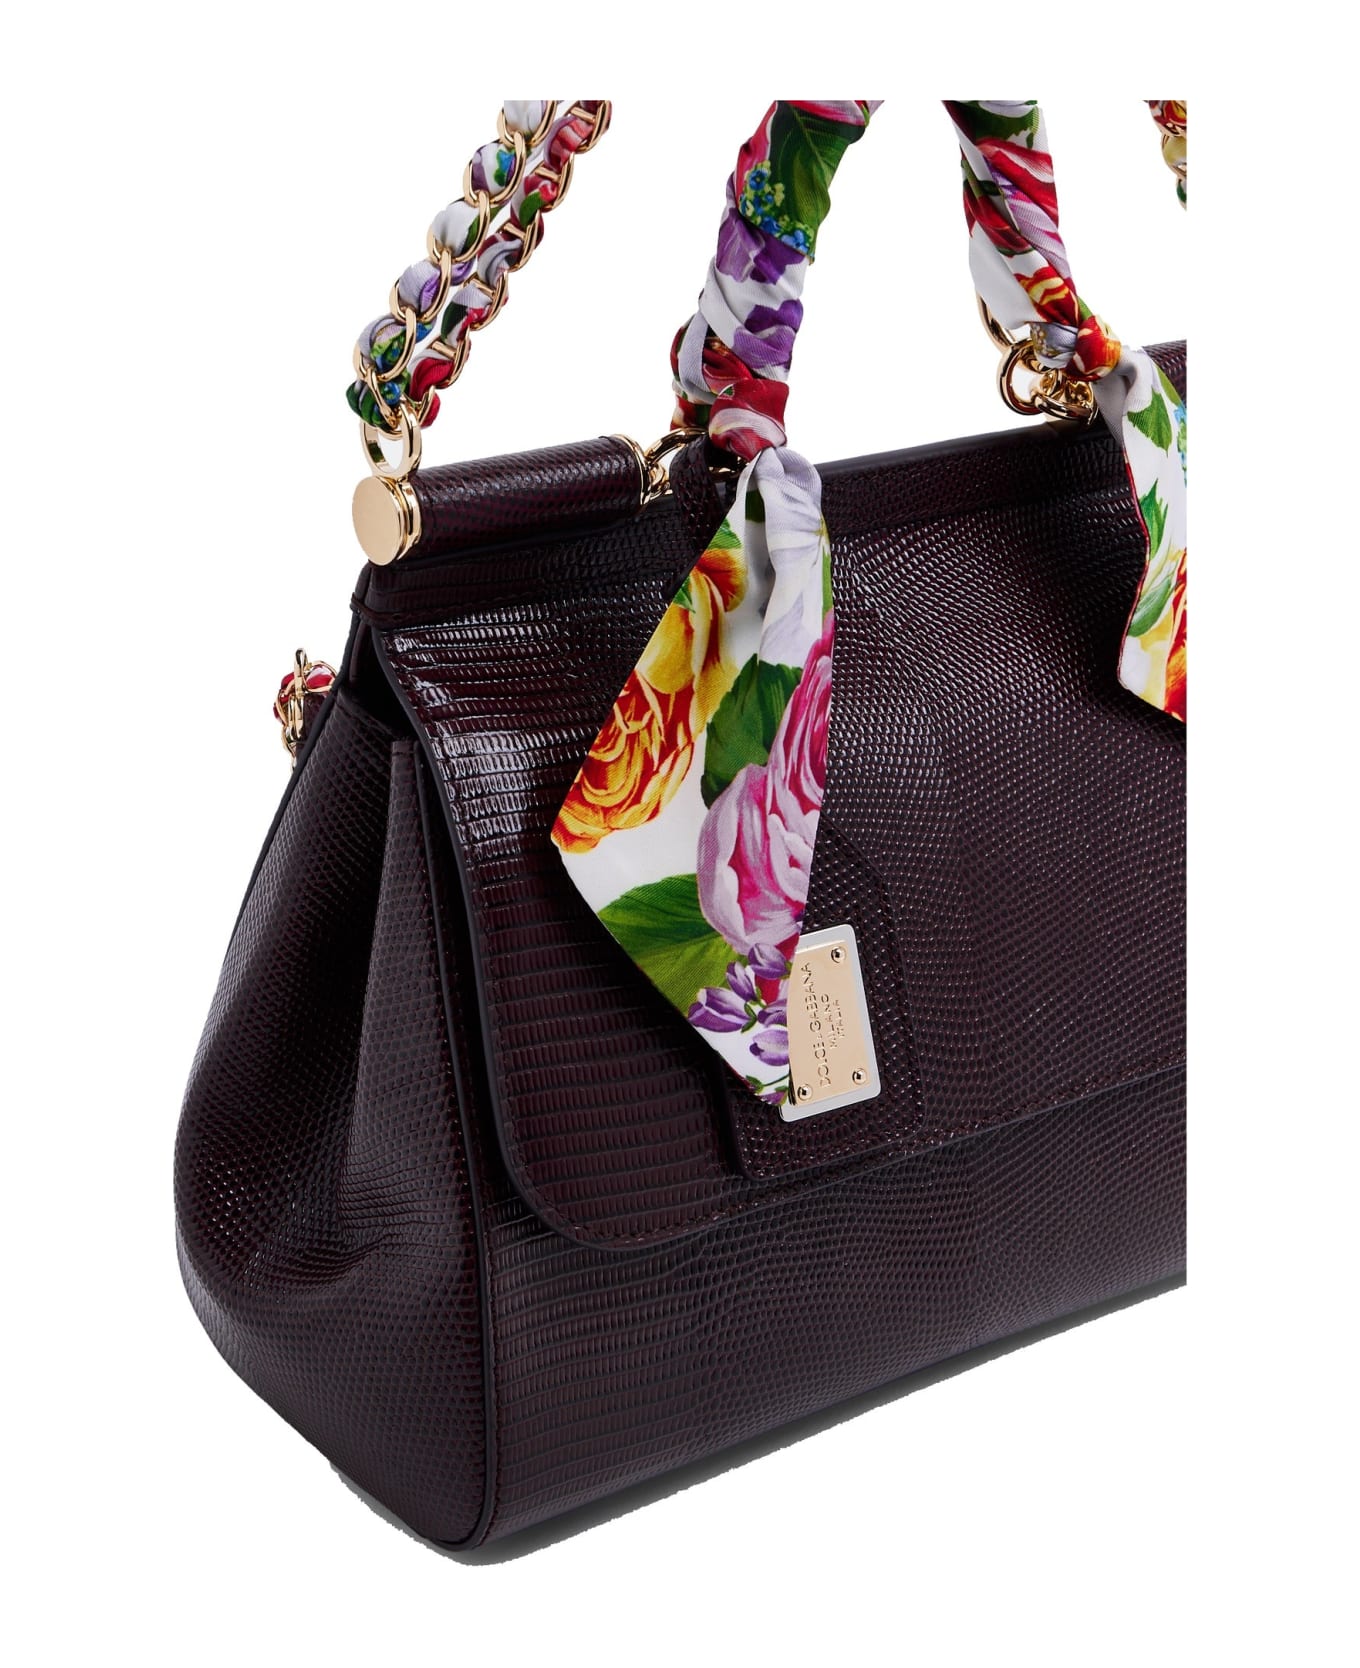 Dolce & Gabbana Sicily Dauphine Handbag - Red トートバッグ